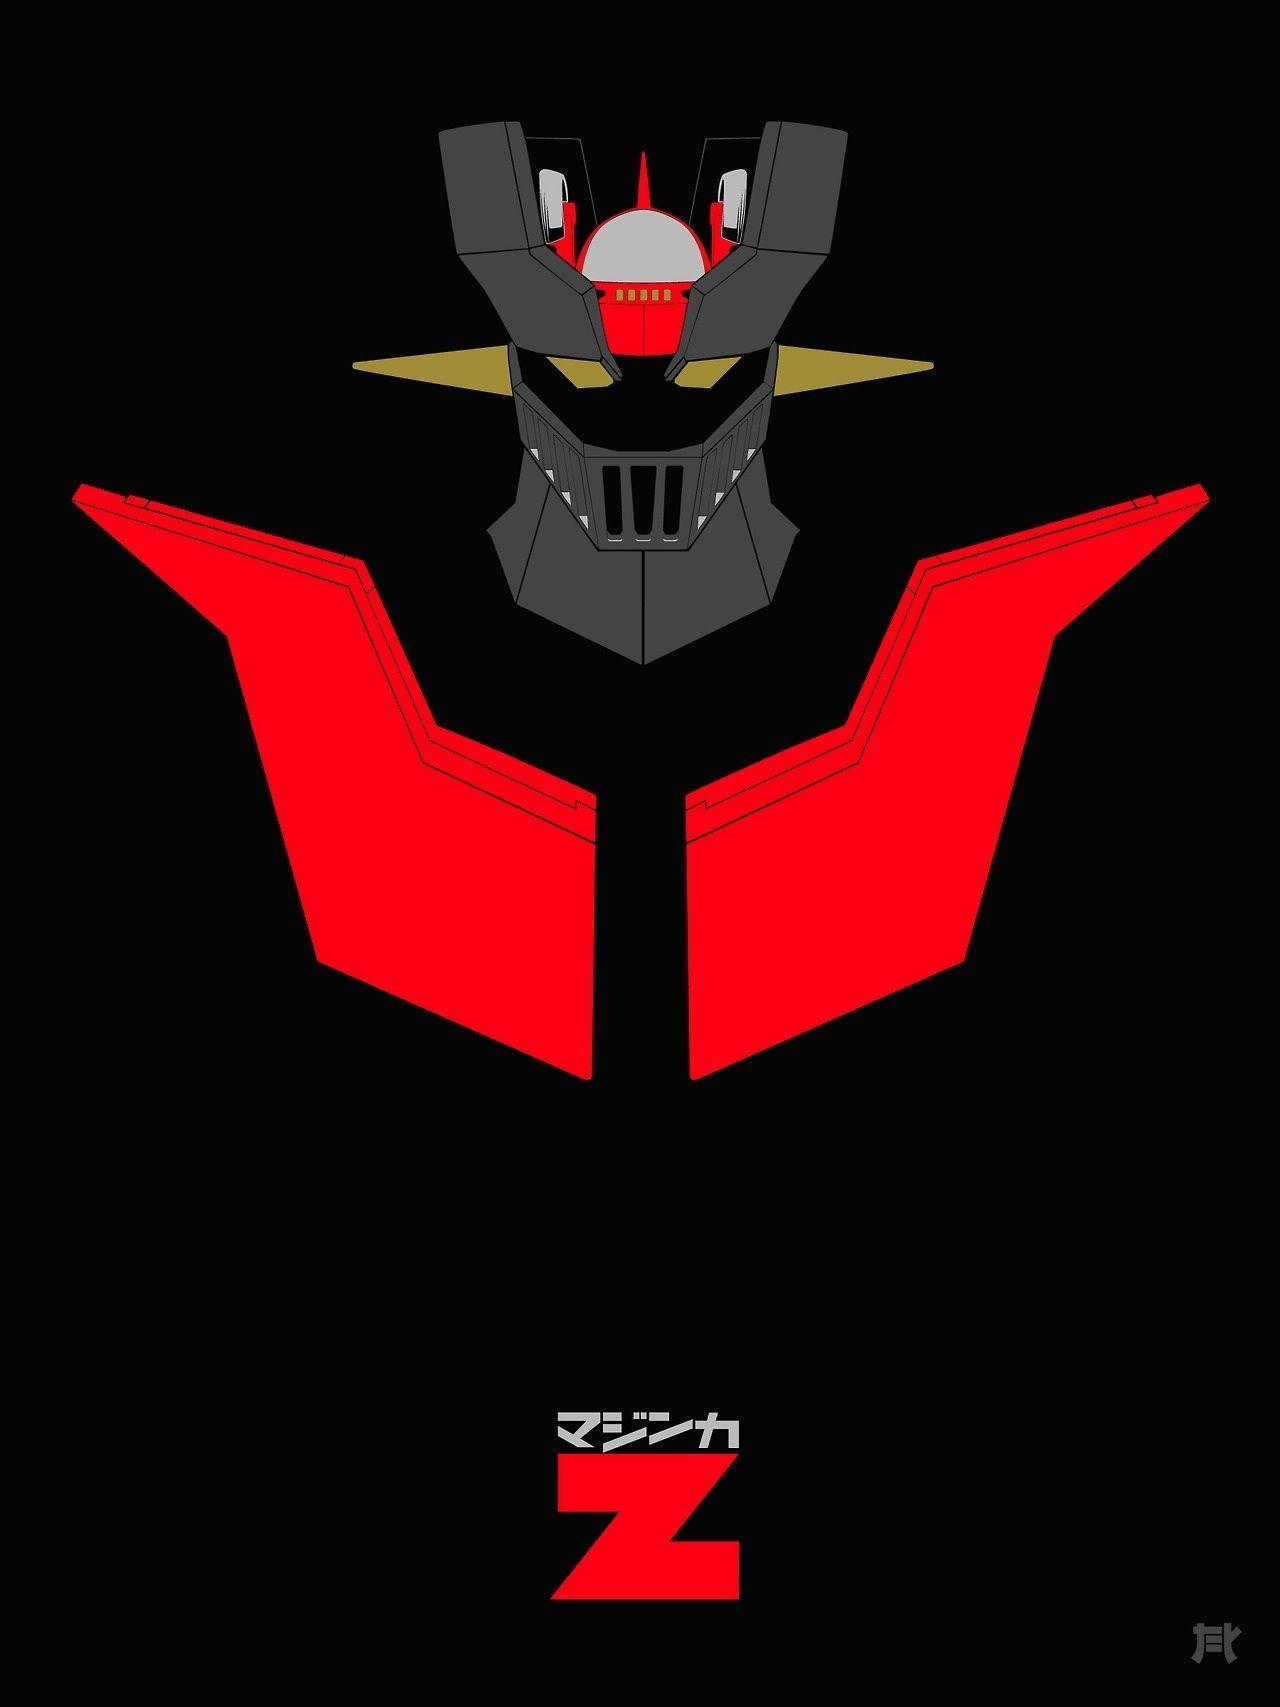 Mazinger Z Logo - Mazinger Z. J Robot. Super robot, Manga, Comics